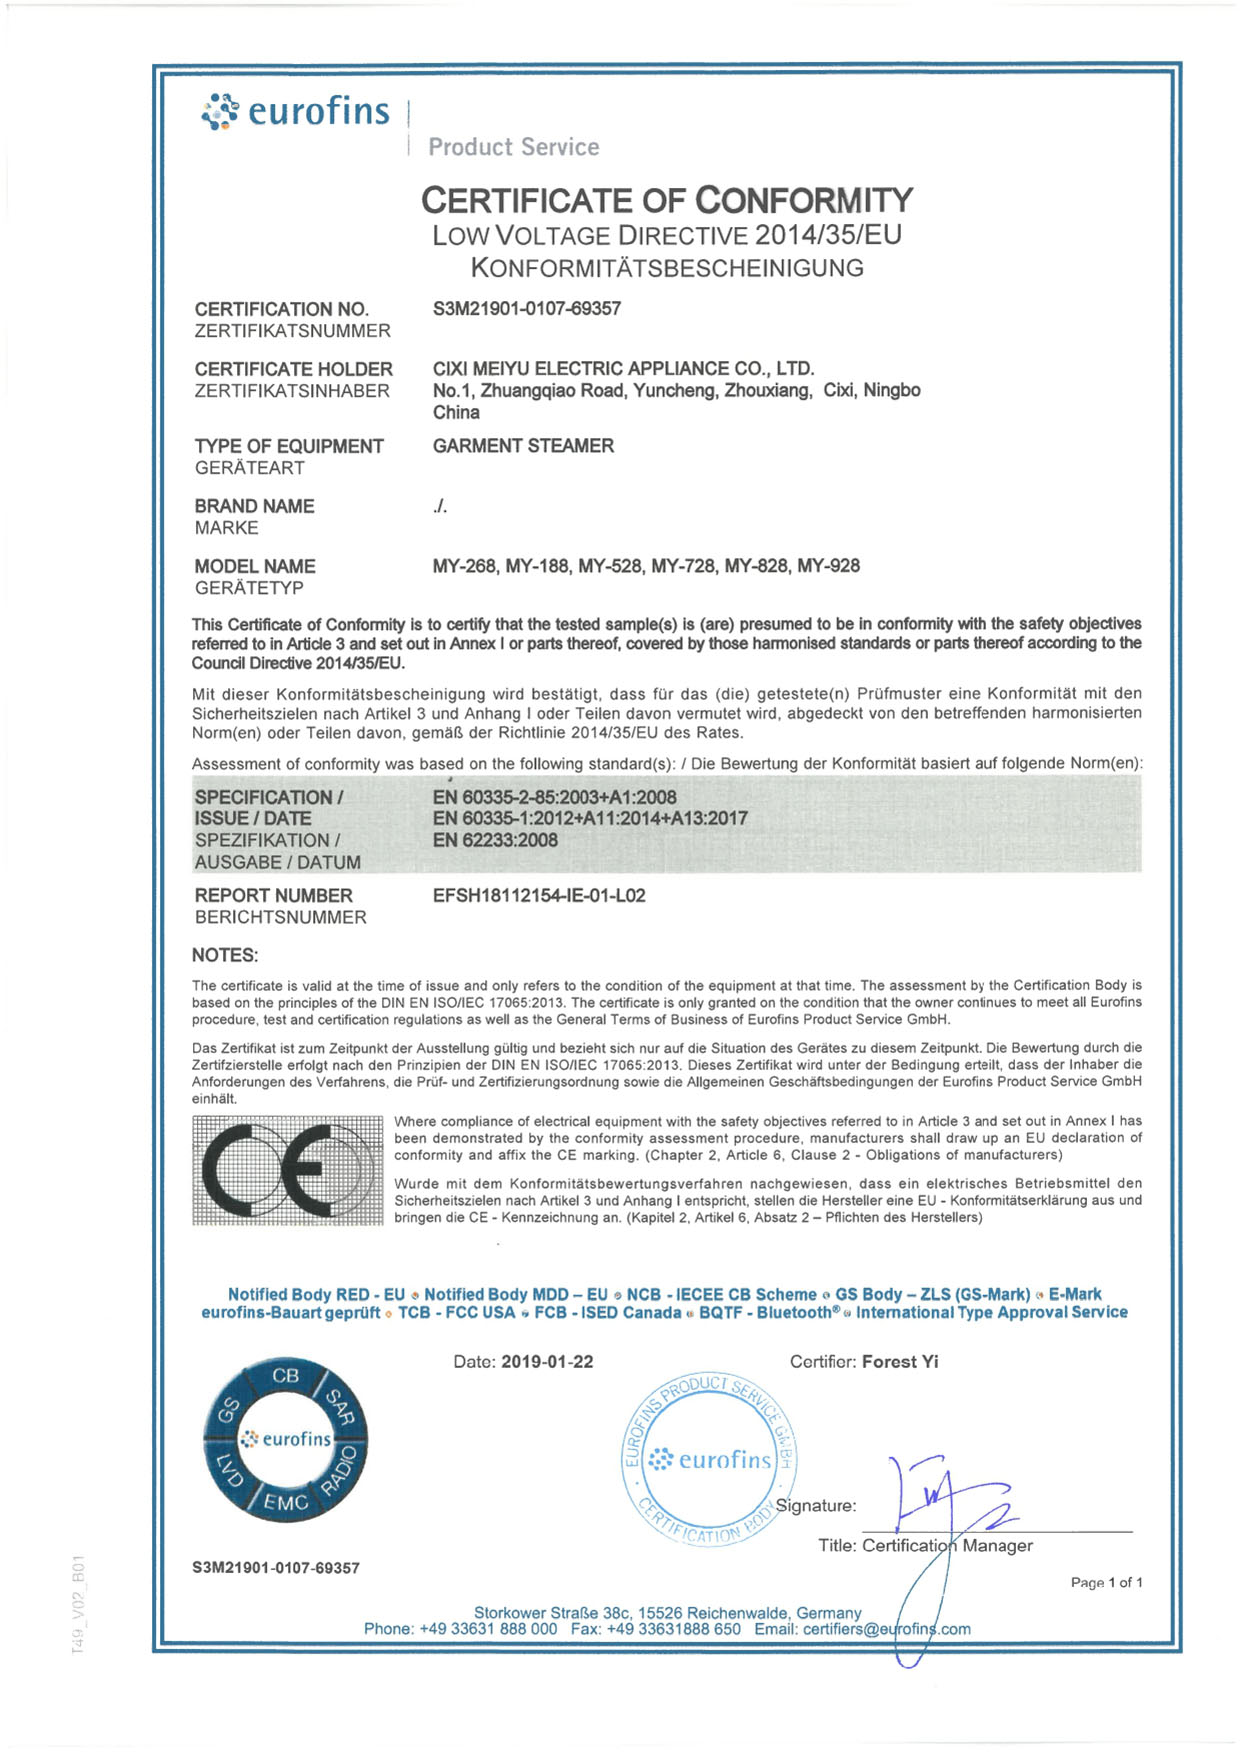 LVD certificate S3M21901-0107-69357_LVD CoC